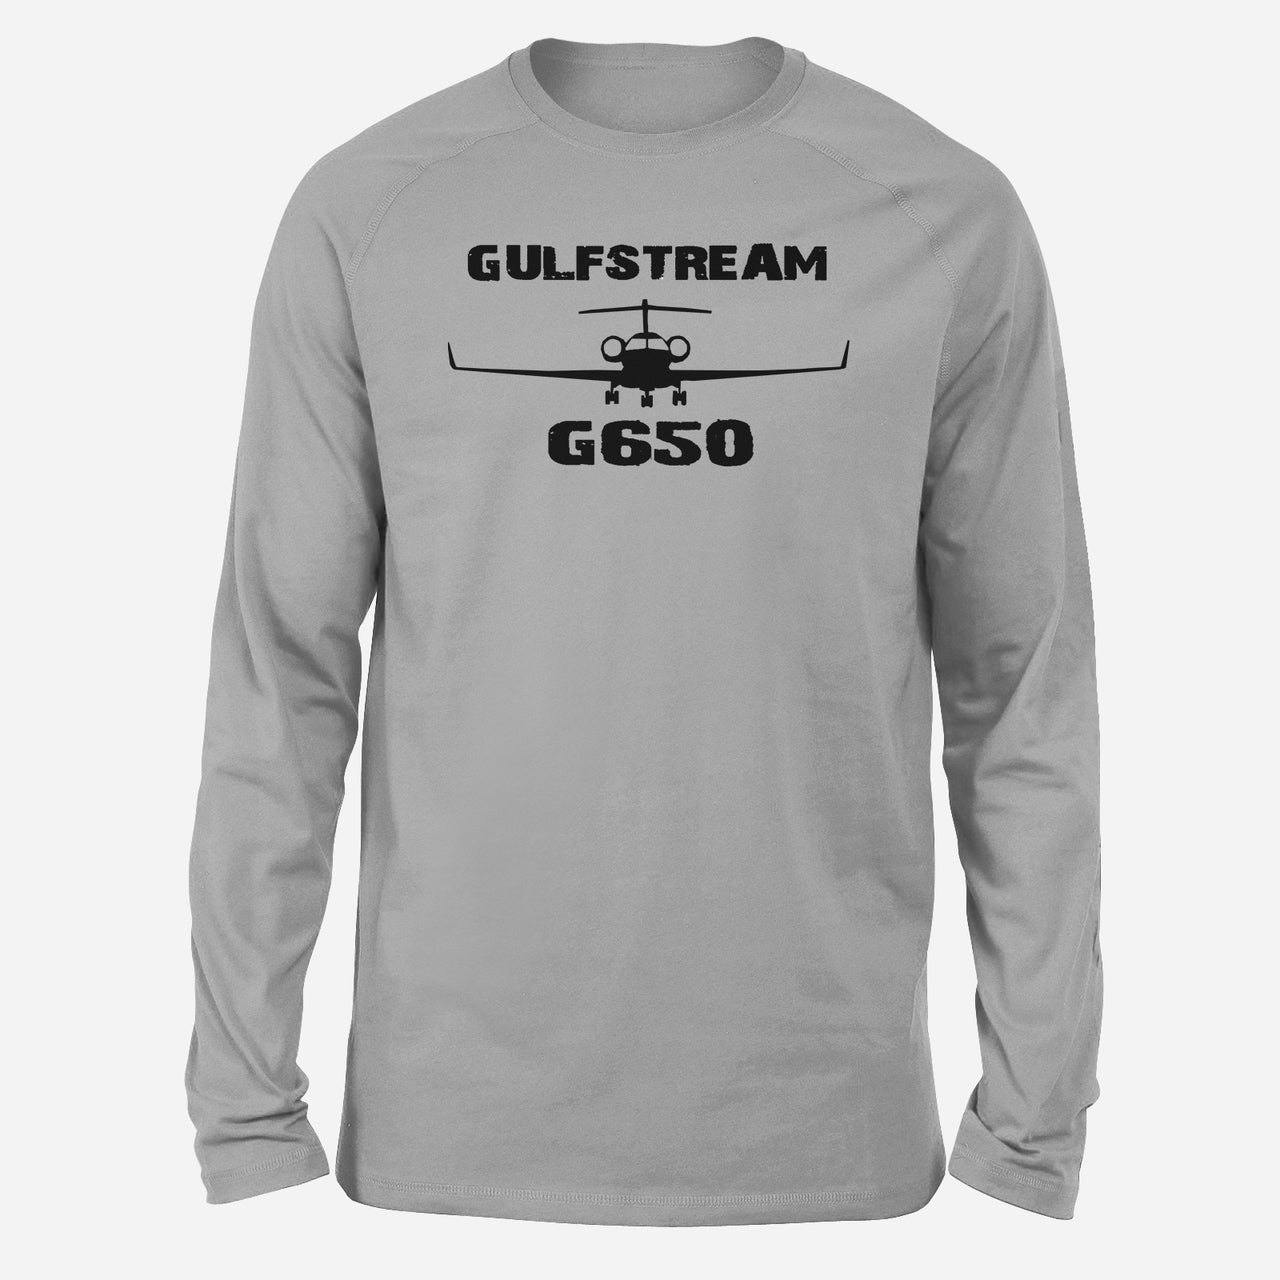 Gulfstream G650 & Plane Designed Long-Sleeve T-Shirts